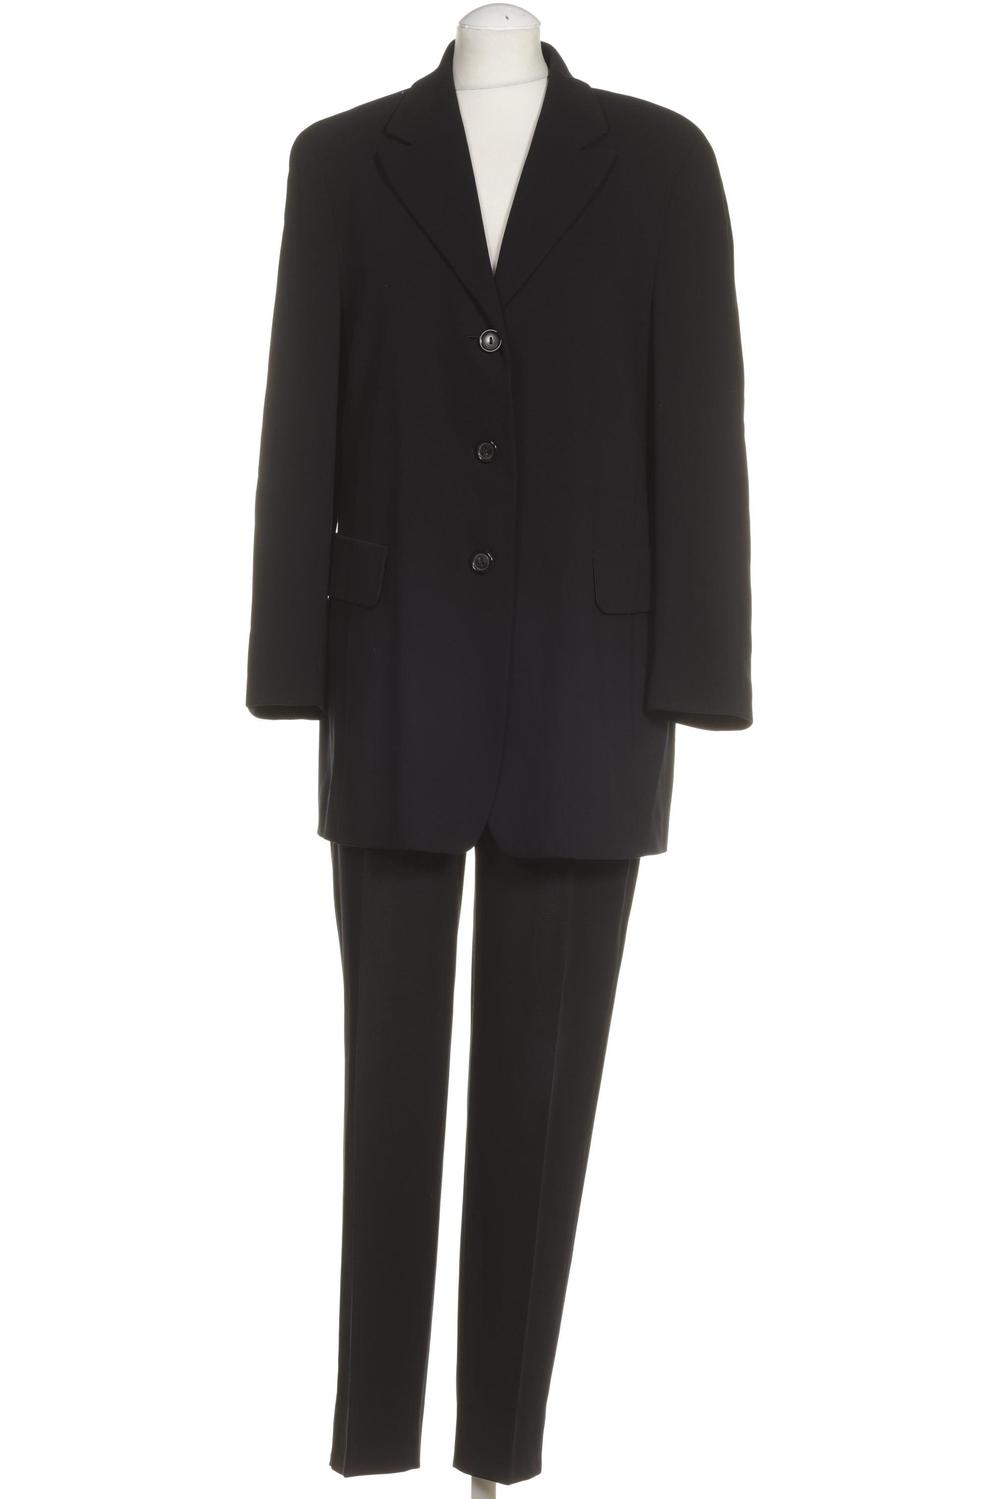 Strenesse Anzug Damen Kostum Suit Gr De 36 Schurwolle Viskose Schwarz ceef7 Ebay